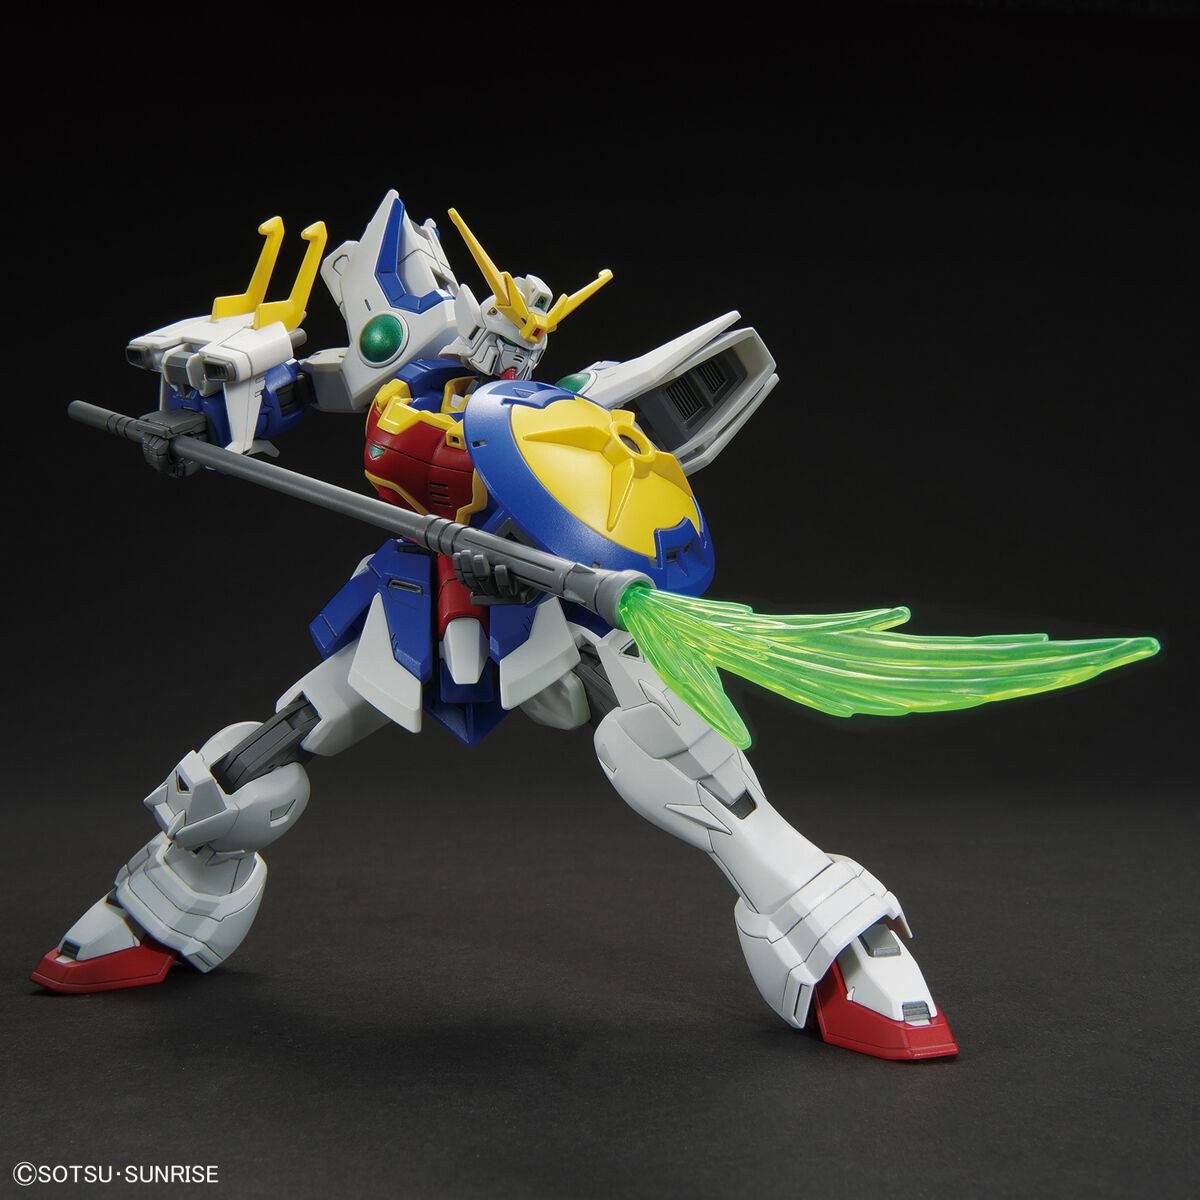 XXXG-01S Shenlong Gundam HGAC 1/144